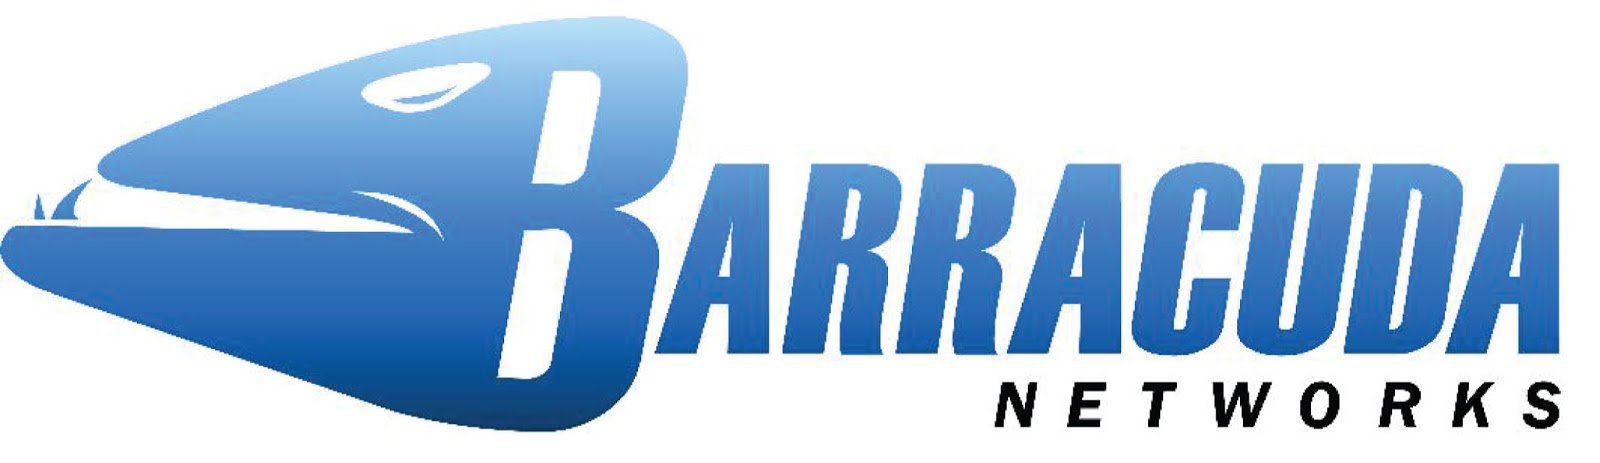 Password disclosure vulnerability in Barracuda Networks | Server Misconfiguration